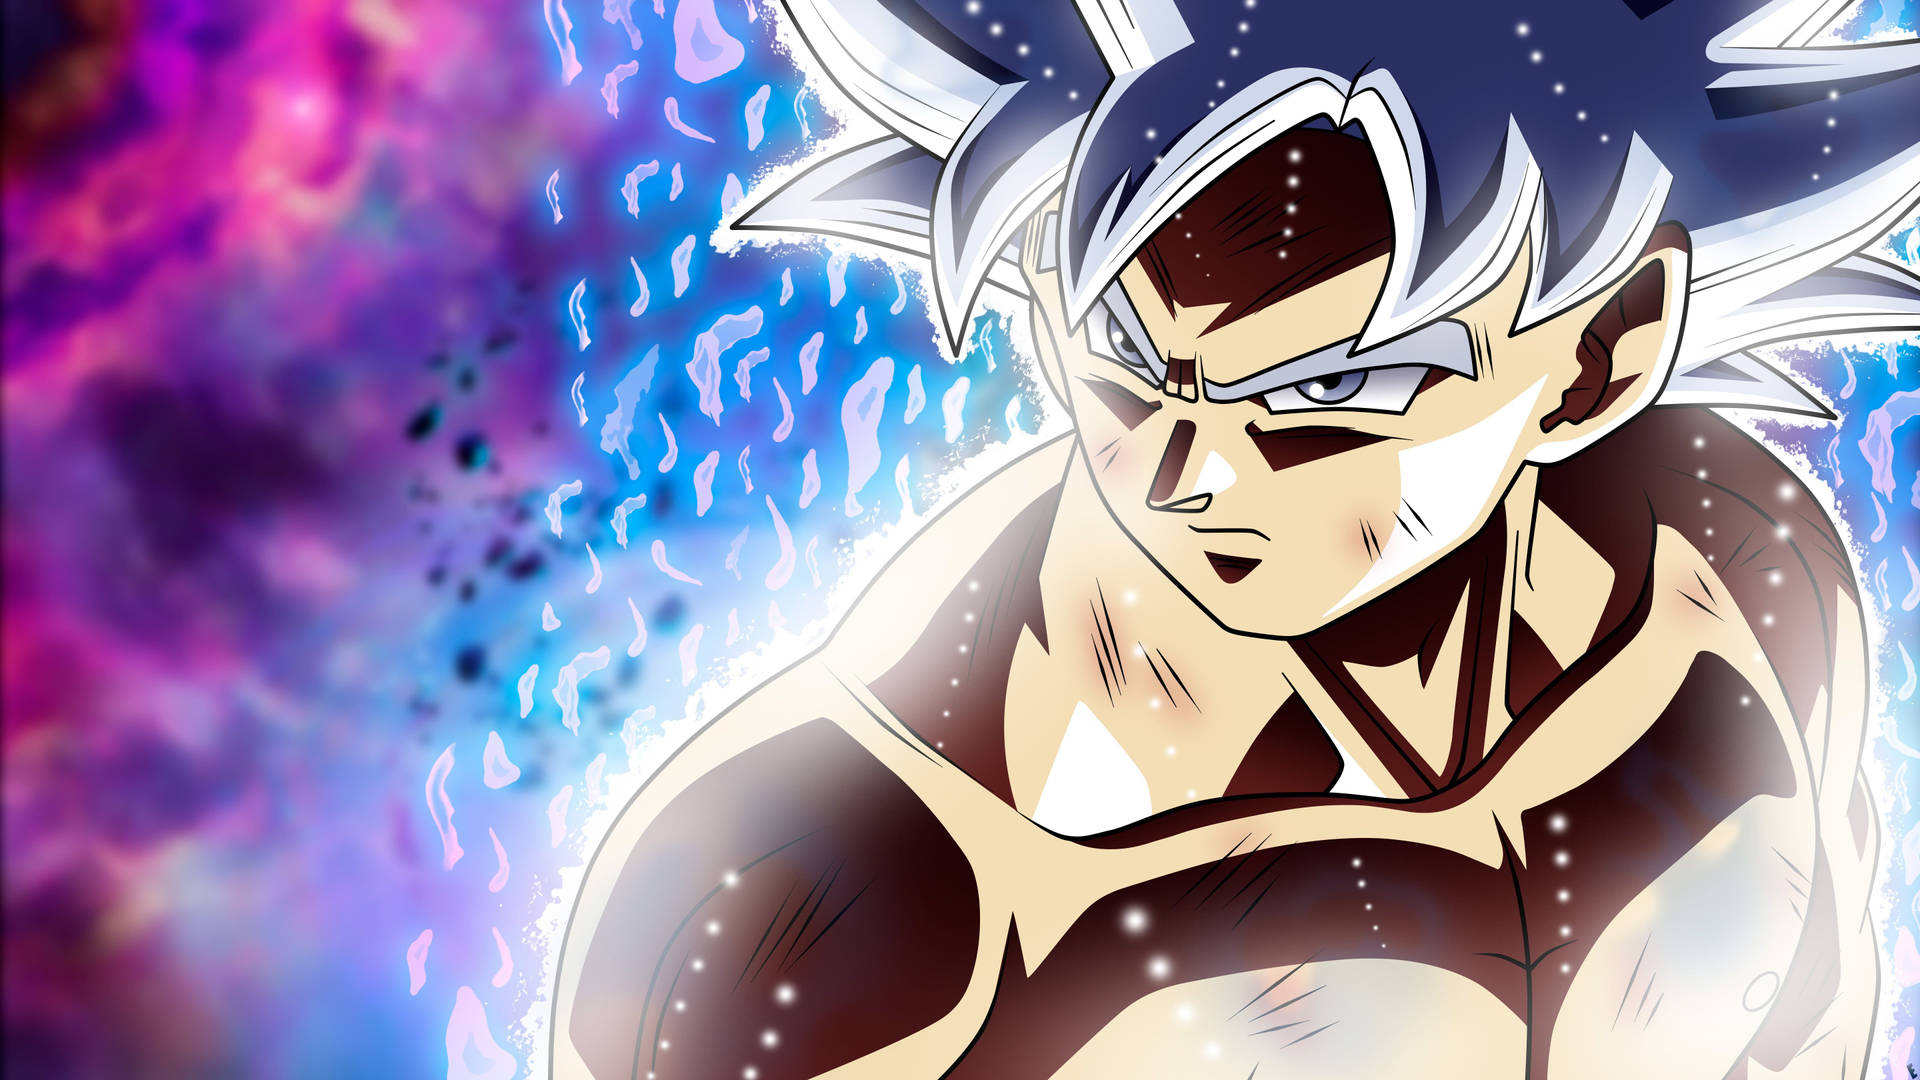 Ultra Instinct Son Goku Wallpaper